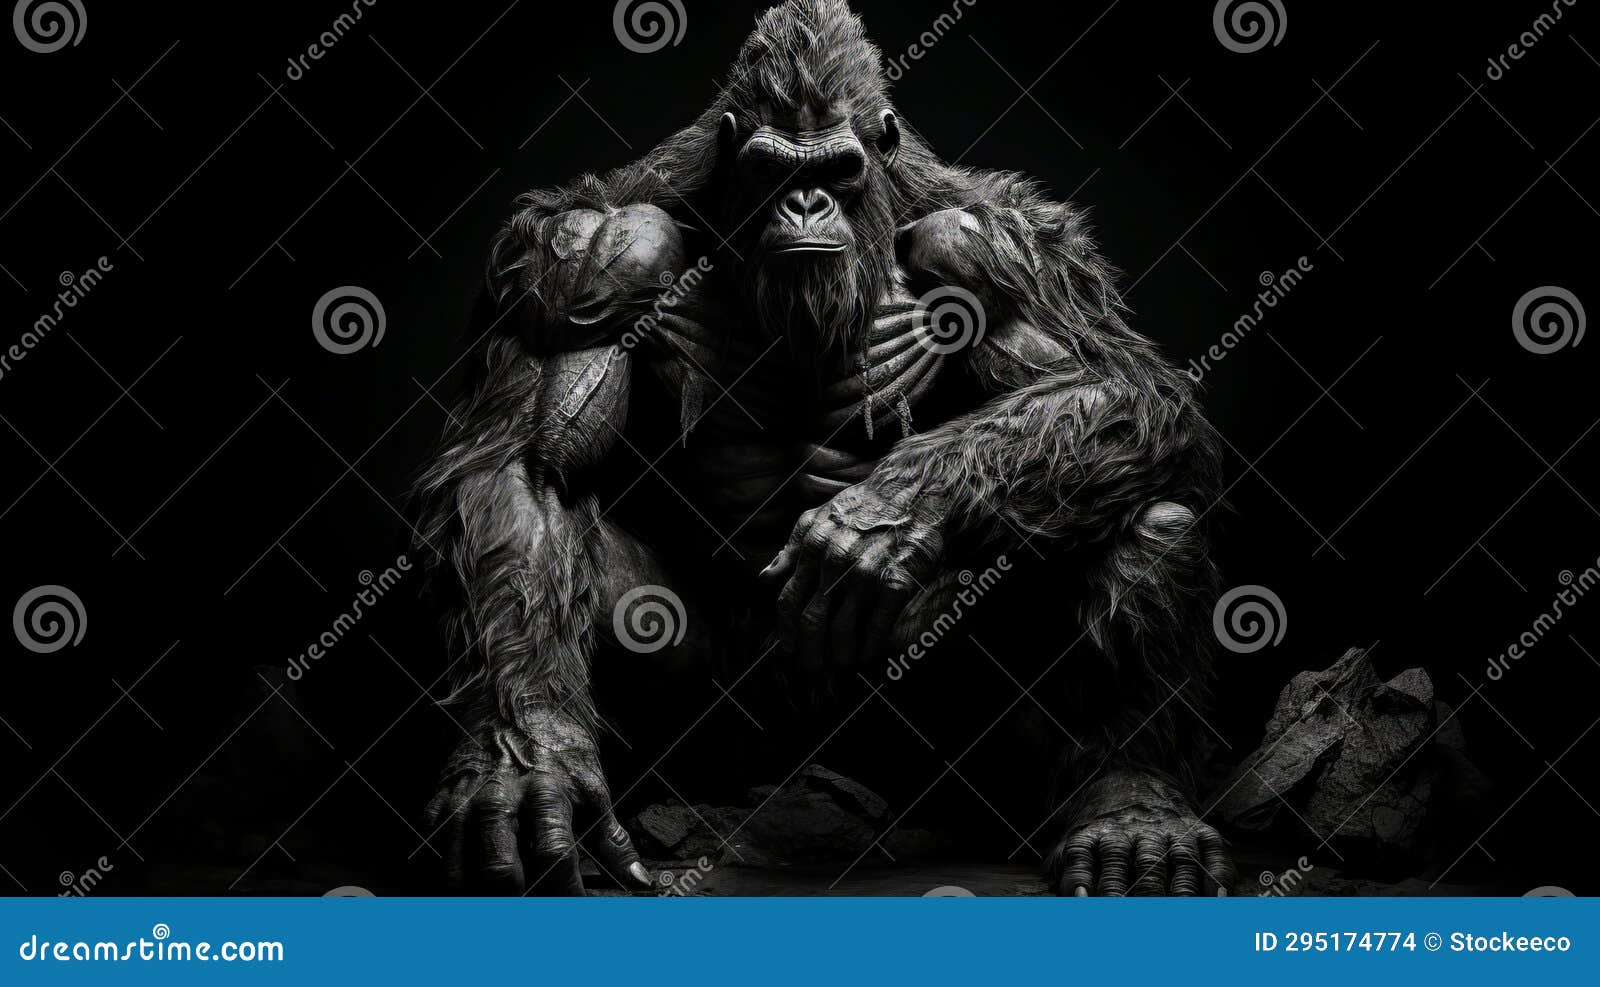 King Kong iconic pose holding Faye Wray 24X36 Poster - Walmart.com